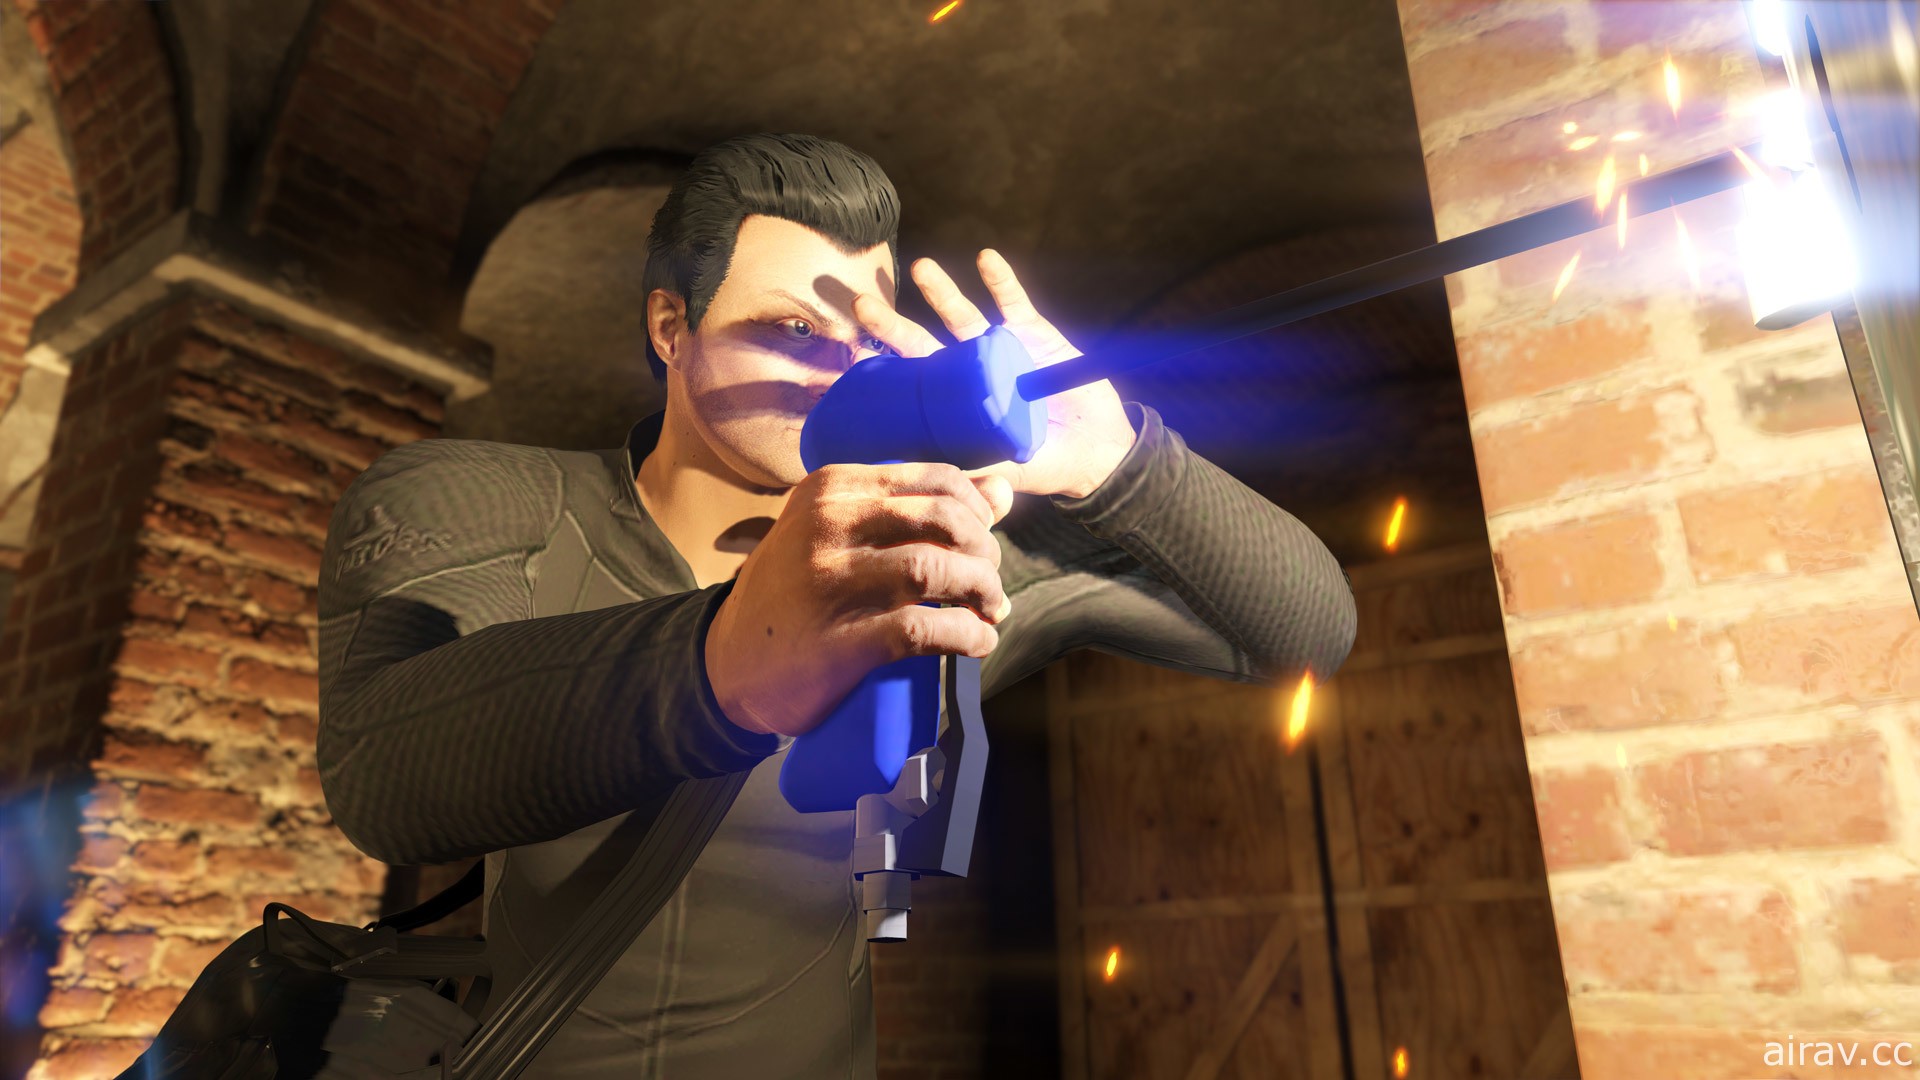 GTA 線上模式全新冒險「佩里克島搶劫」詳情公布 製作團隊分享遊戲特色